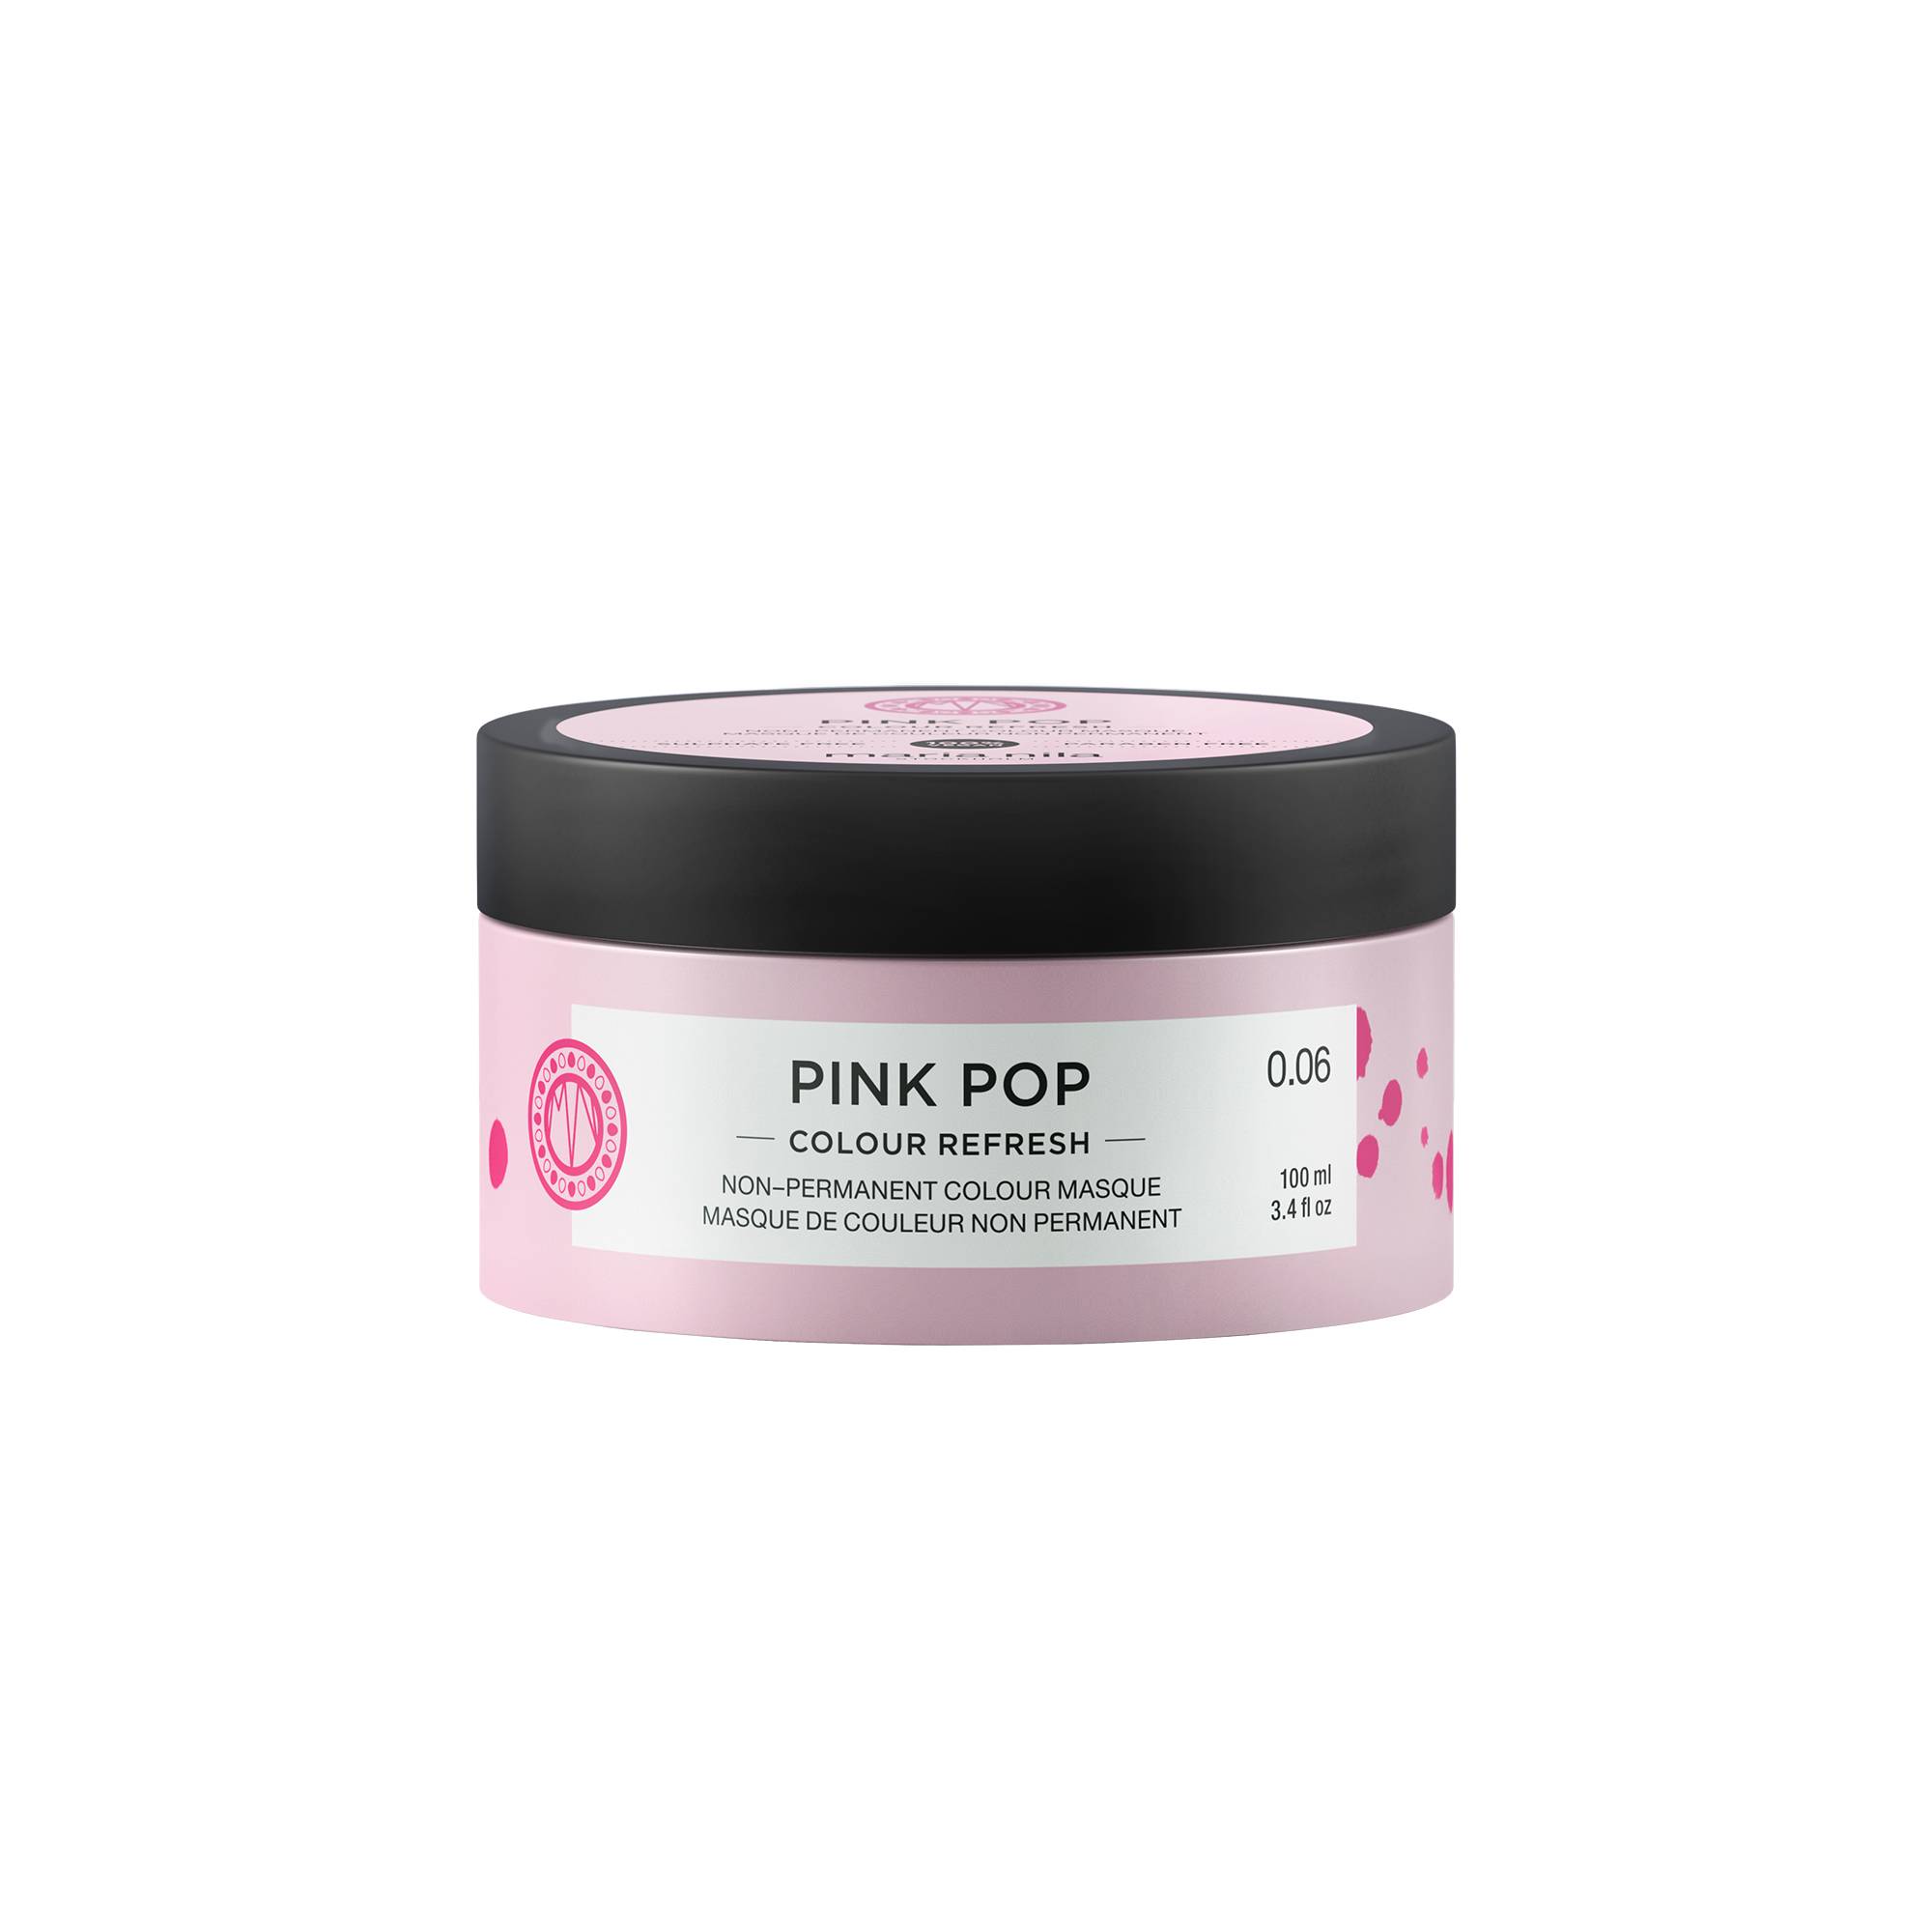 Masque repigmentant Colour Refresh 0.06 Pink pop de la marque Maria Nila Contenance 100ml - 1